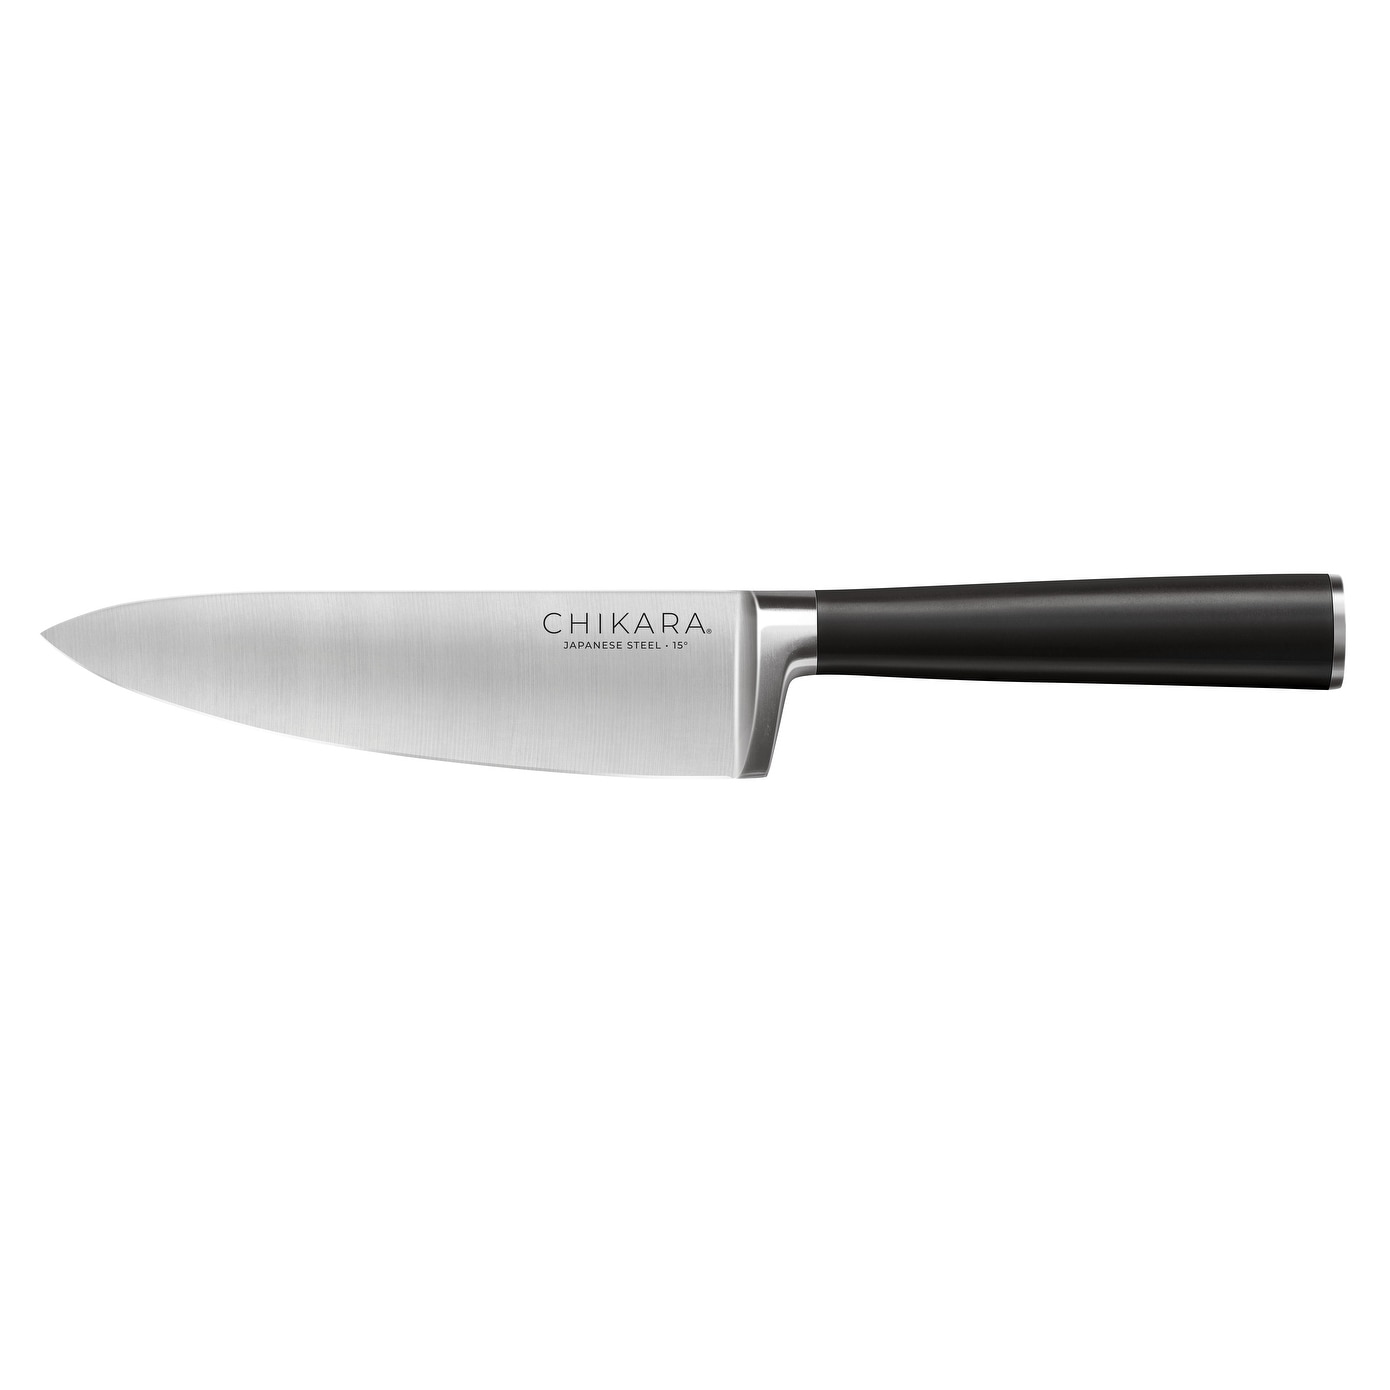 Ginsu Chikara Series Forged 8-piece Japanese Steel Knife Cutlery